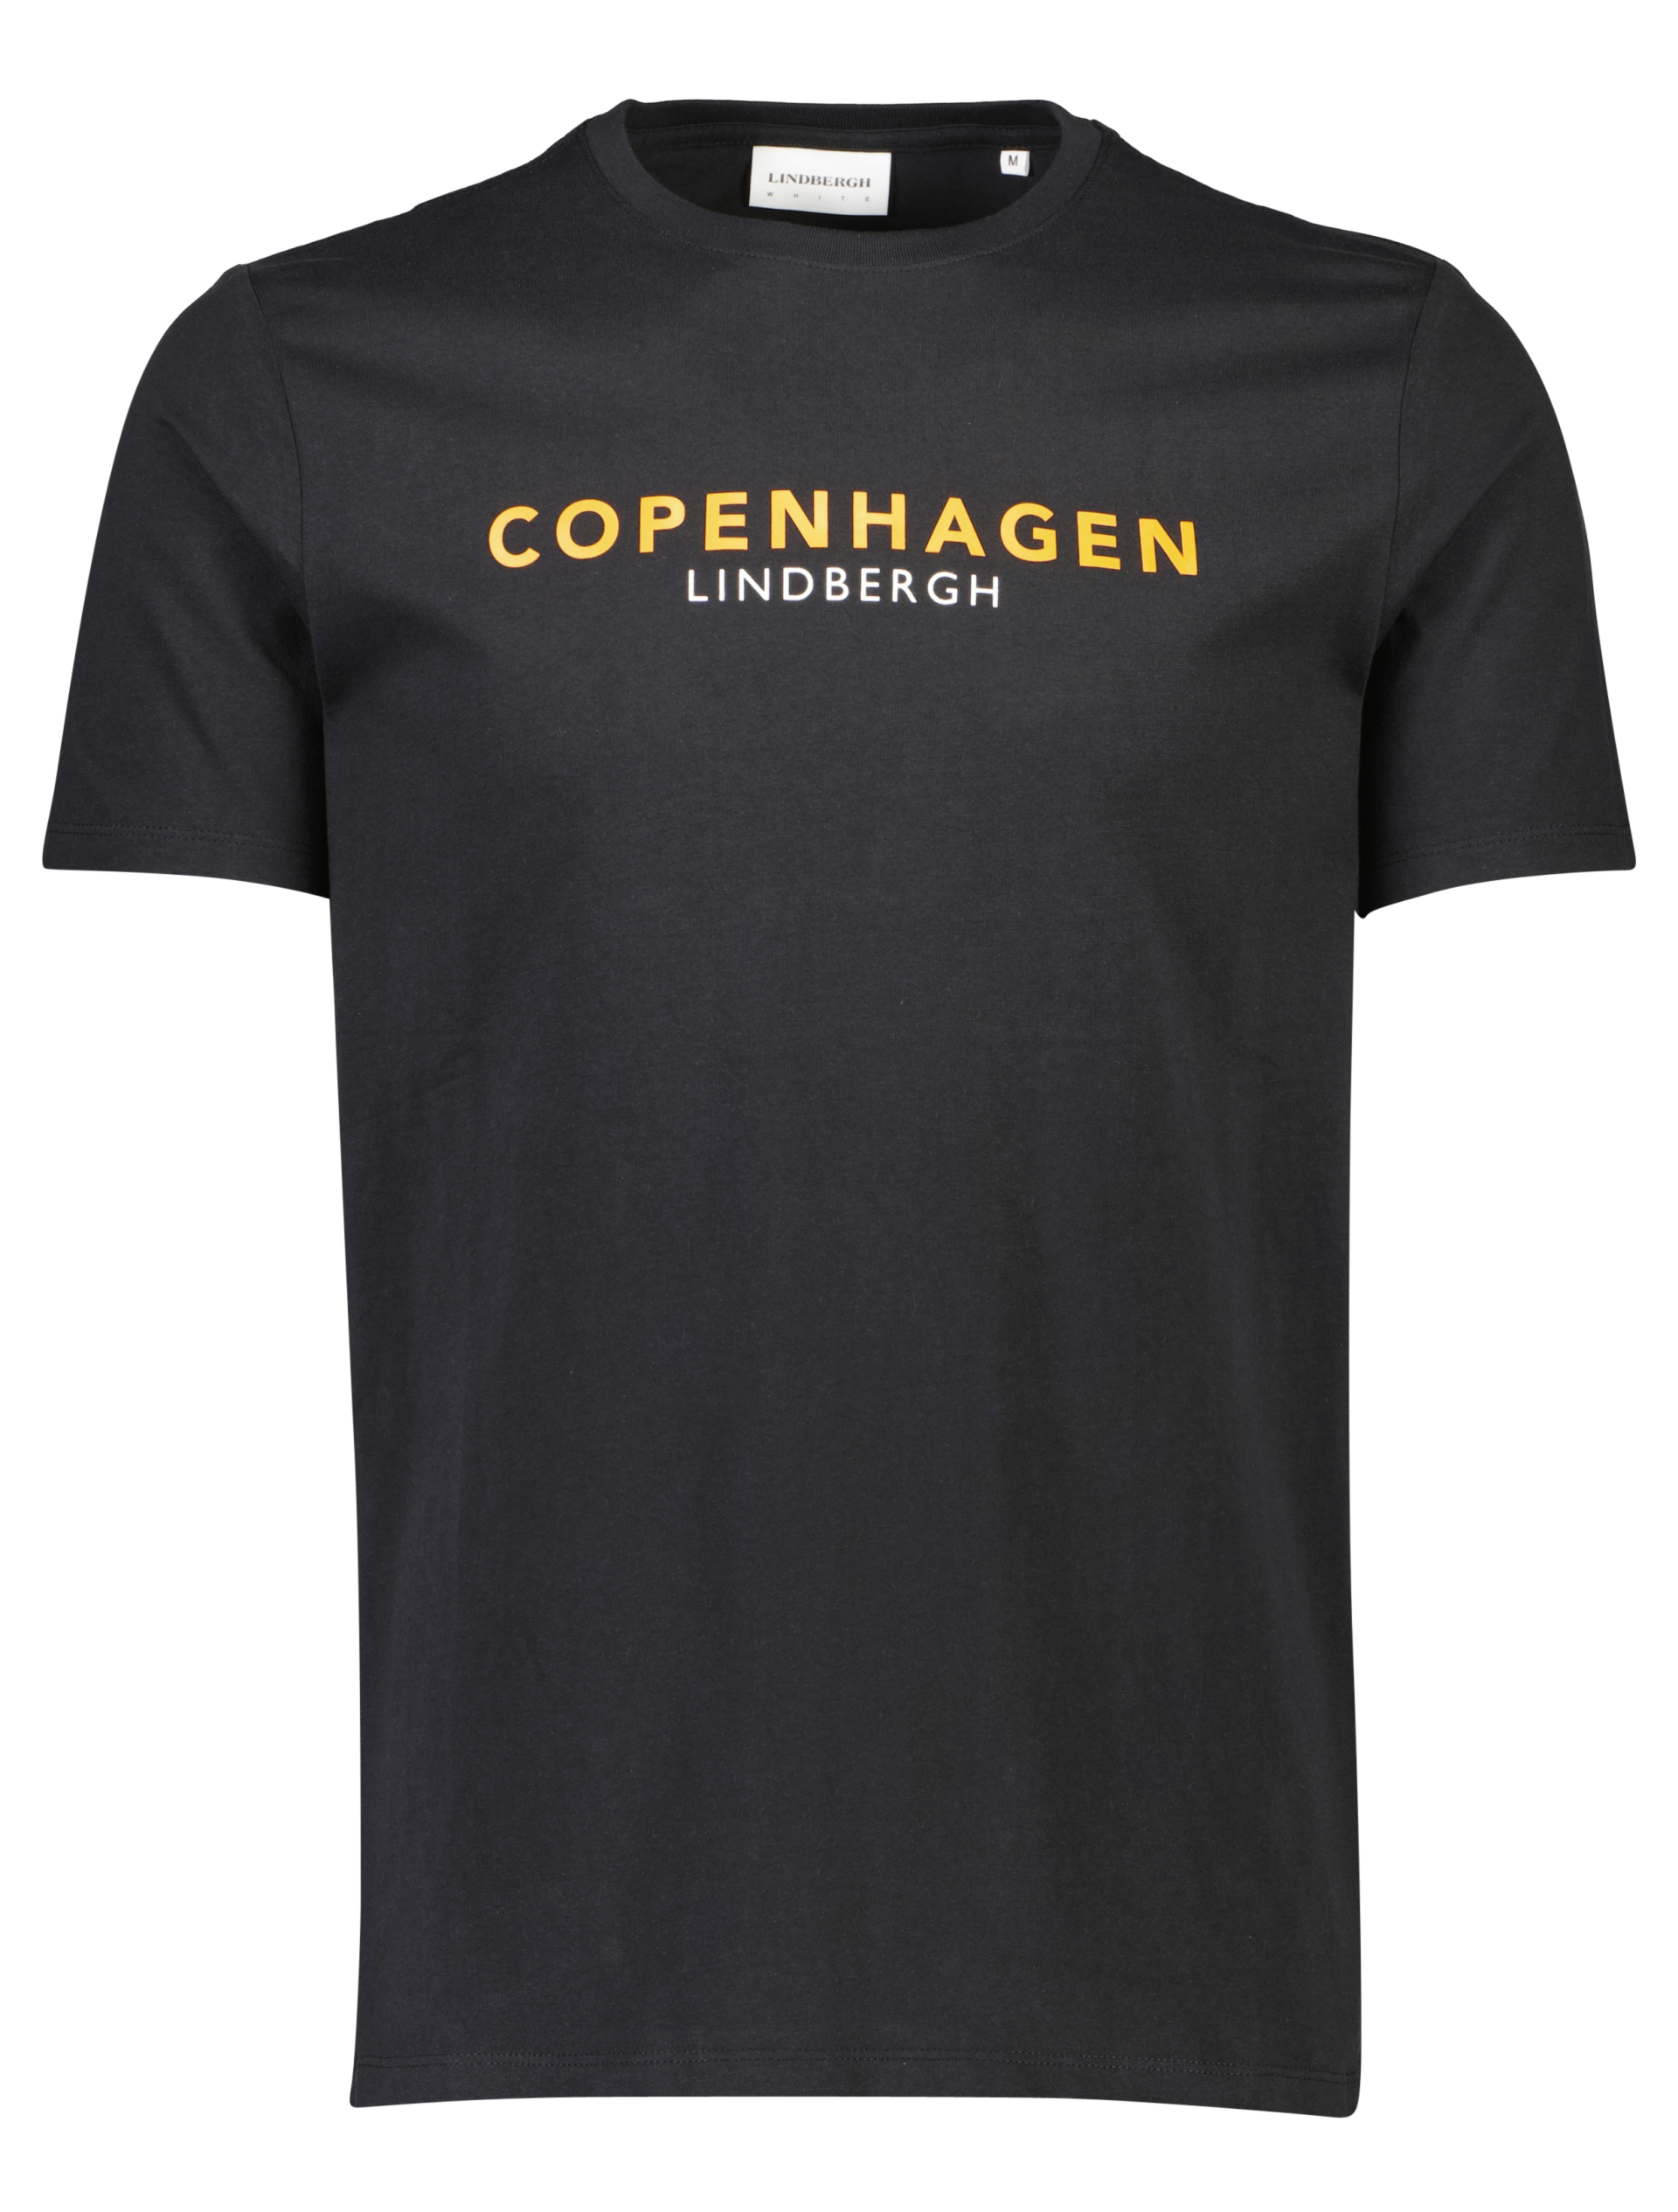 Lindbergh T-shirt sort / black 123